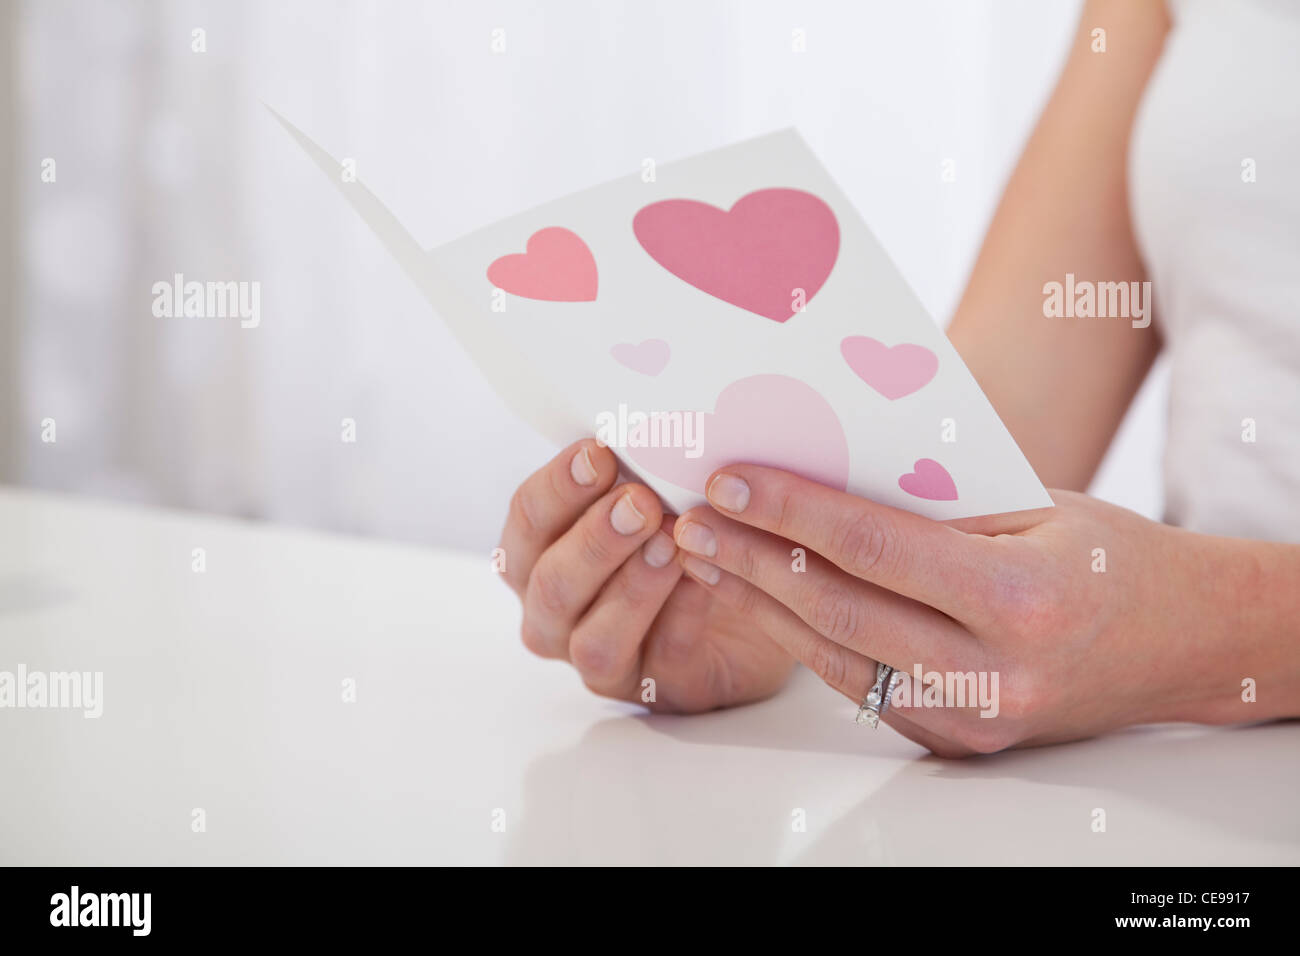 USA, Illinois, Metamora, Close-up of woman's hands holding Valentine's card Stock Photo